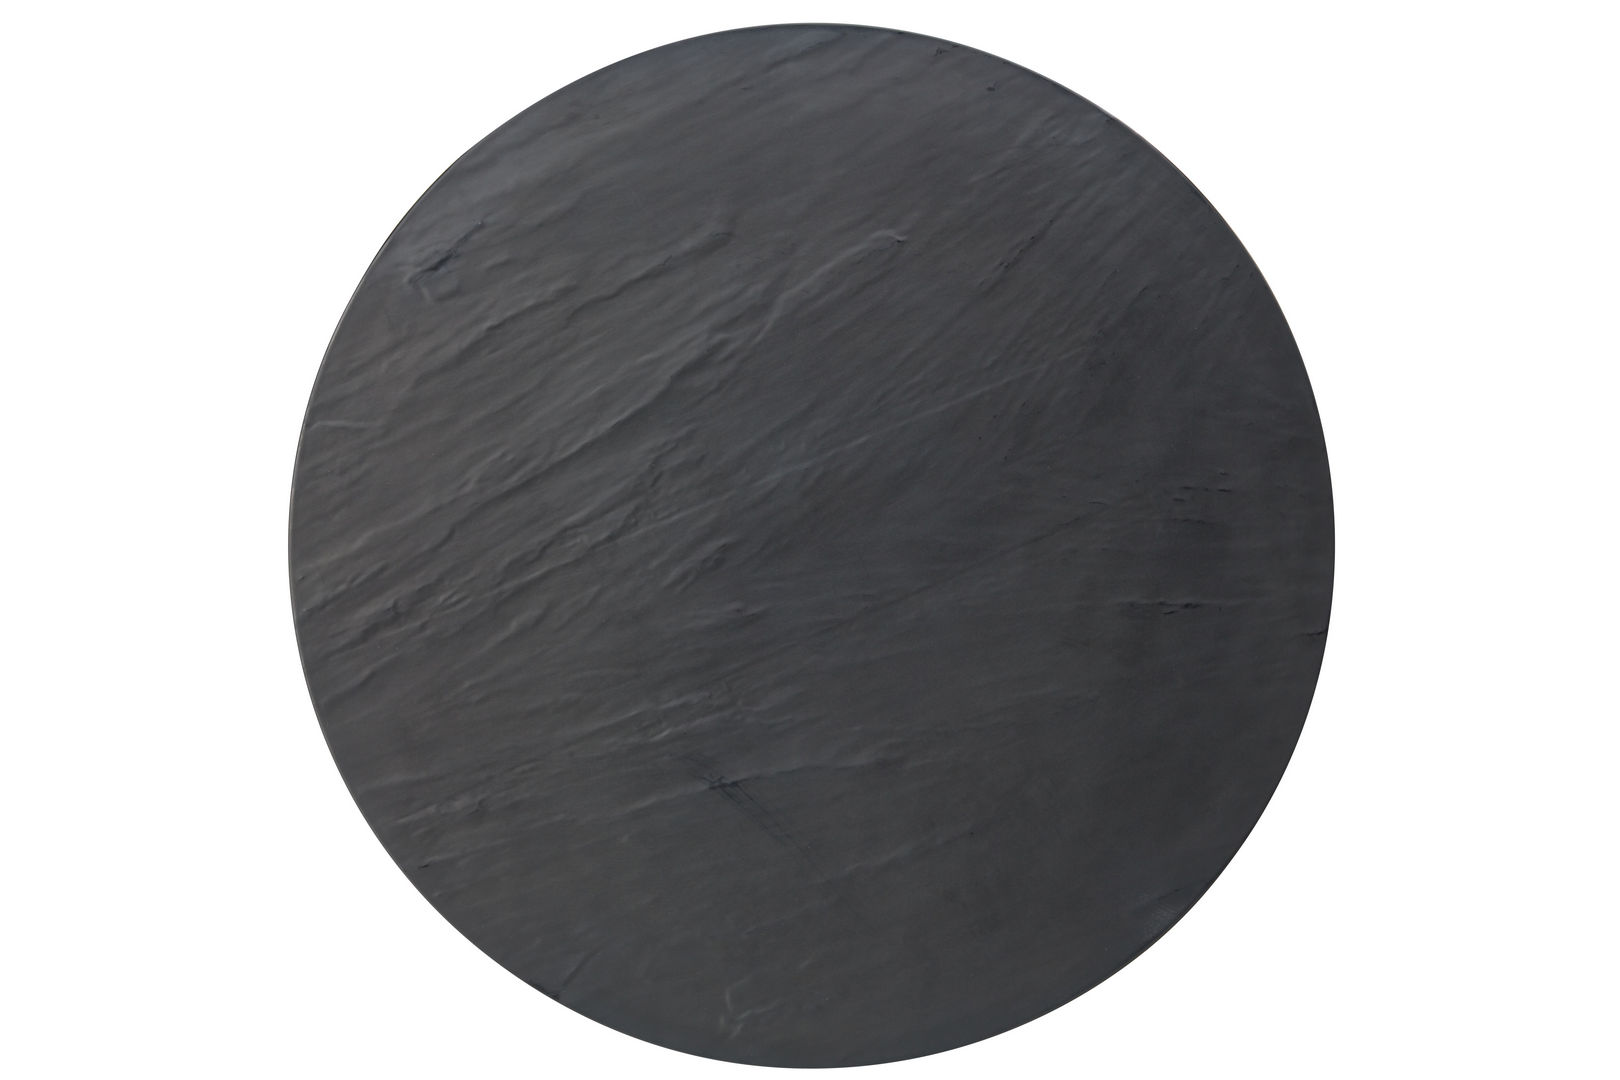 Slate/Granite Round Platter 17